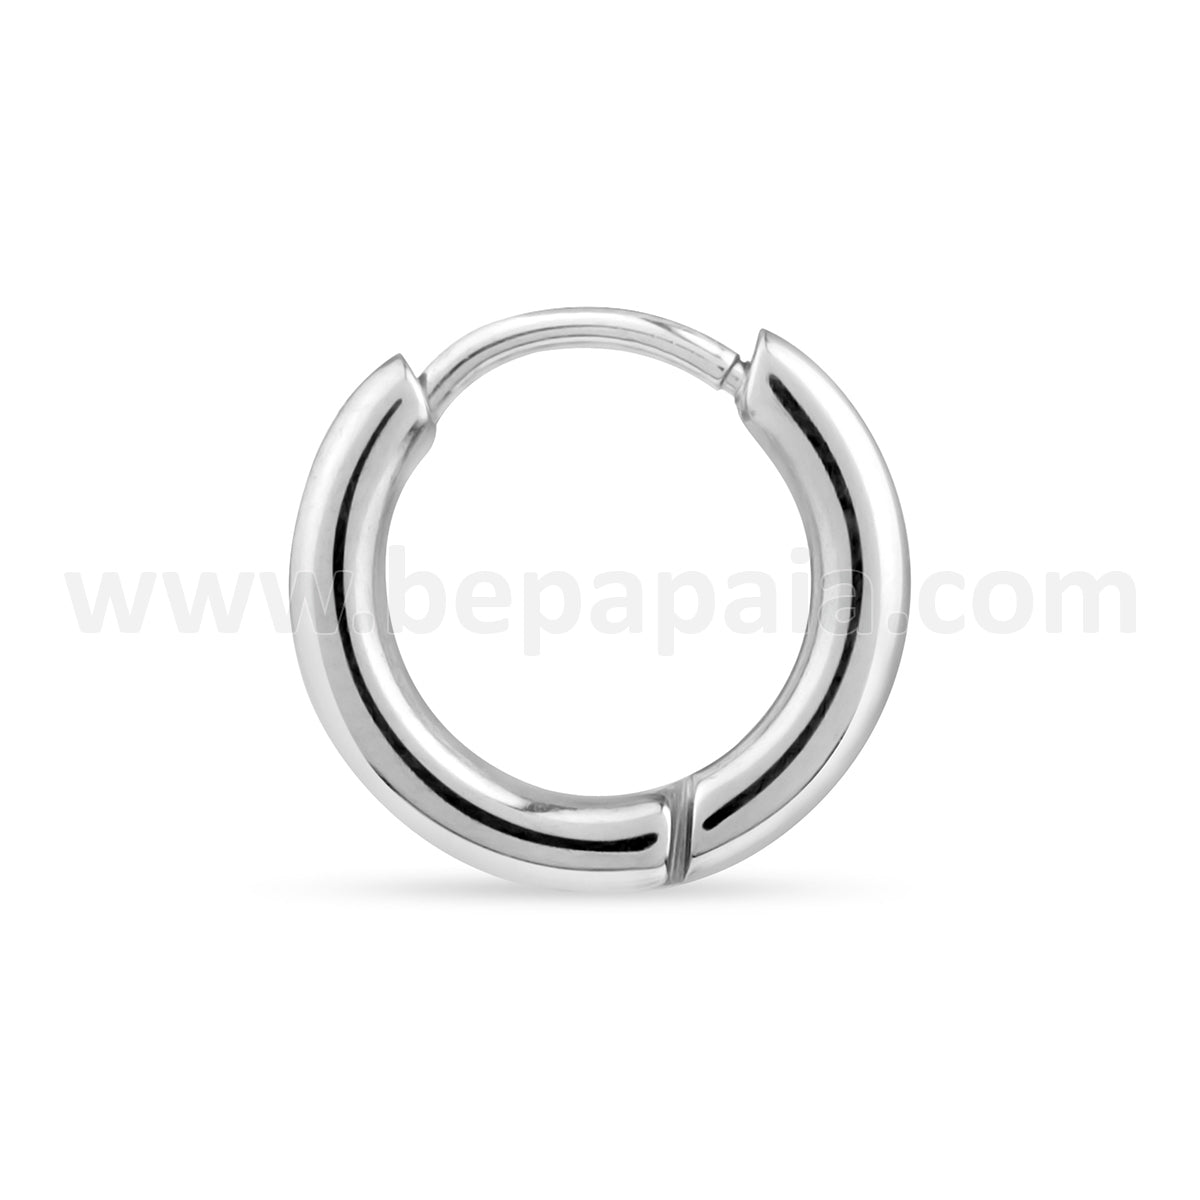 Steel hoop earring of 2mm (small sizes: 8-12mm)